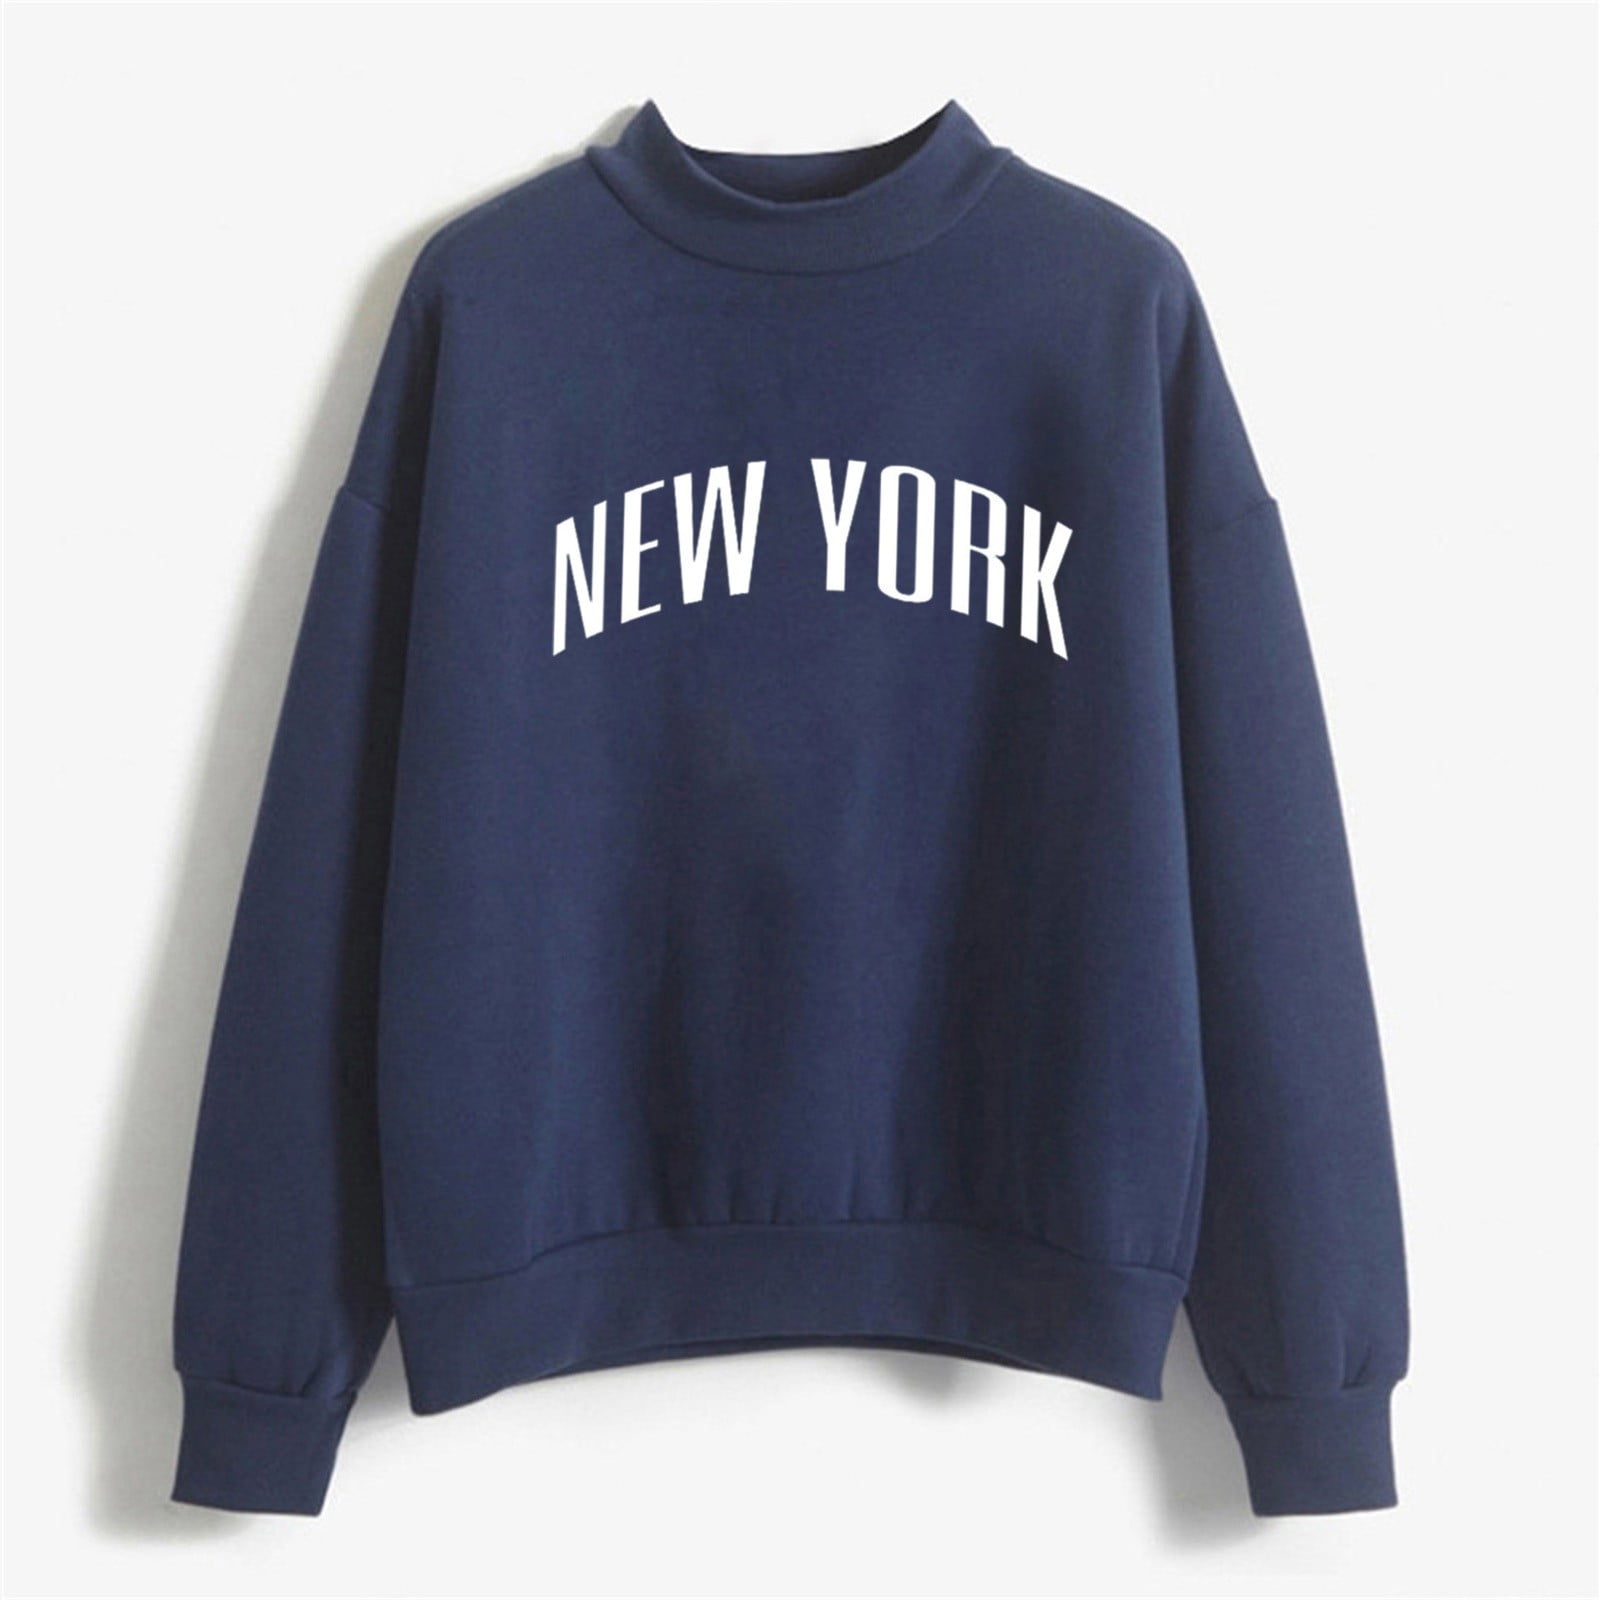 Dyfzdhu Oversized Crewneck Sweatshirts Women New York USA Graphic Long  Sleeve Pullover Sweater Navy Blue 